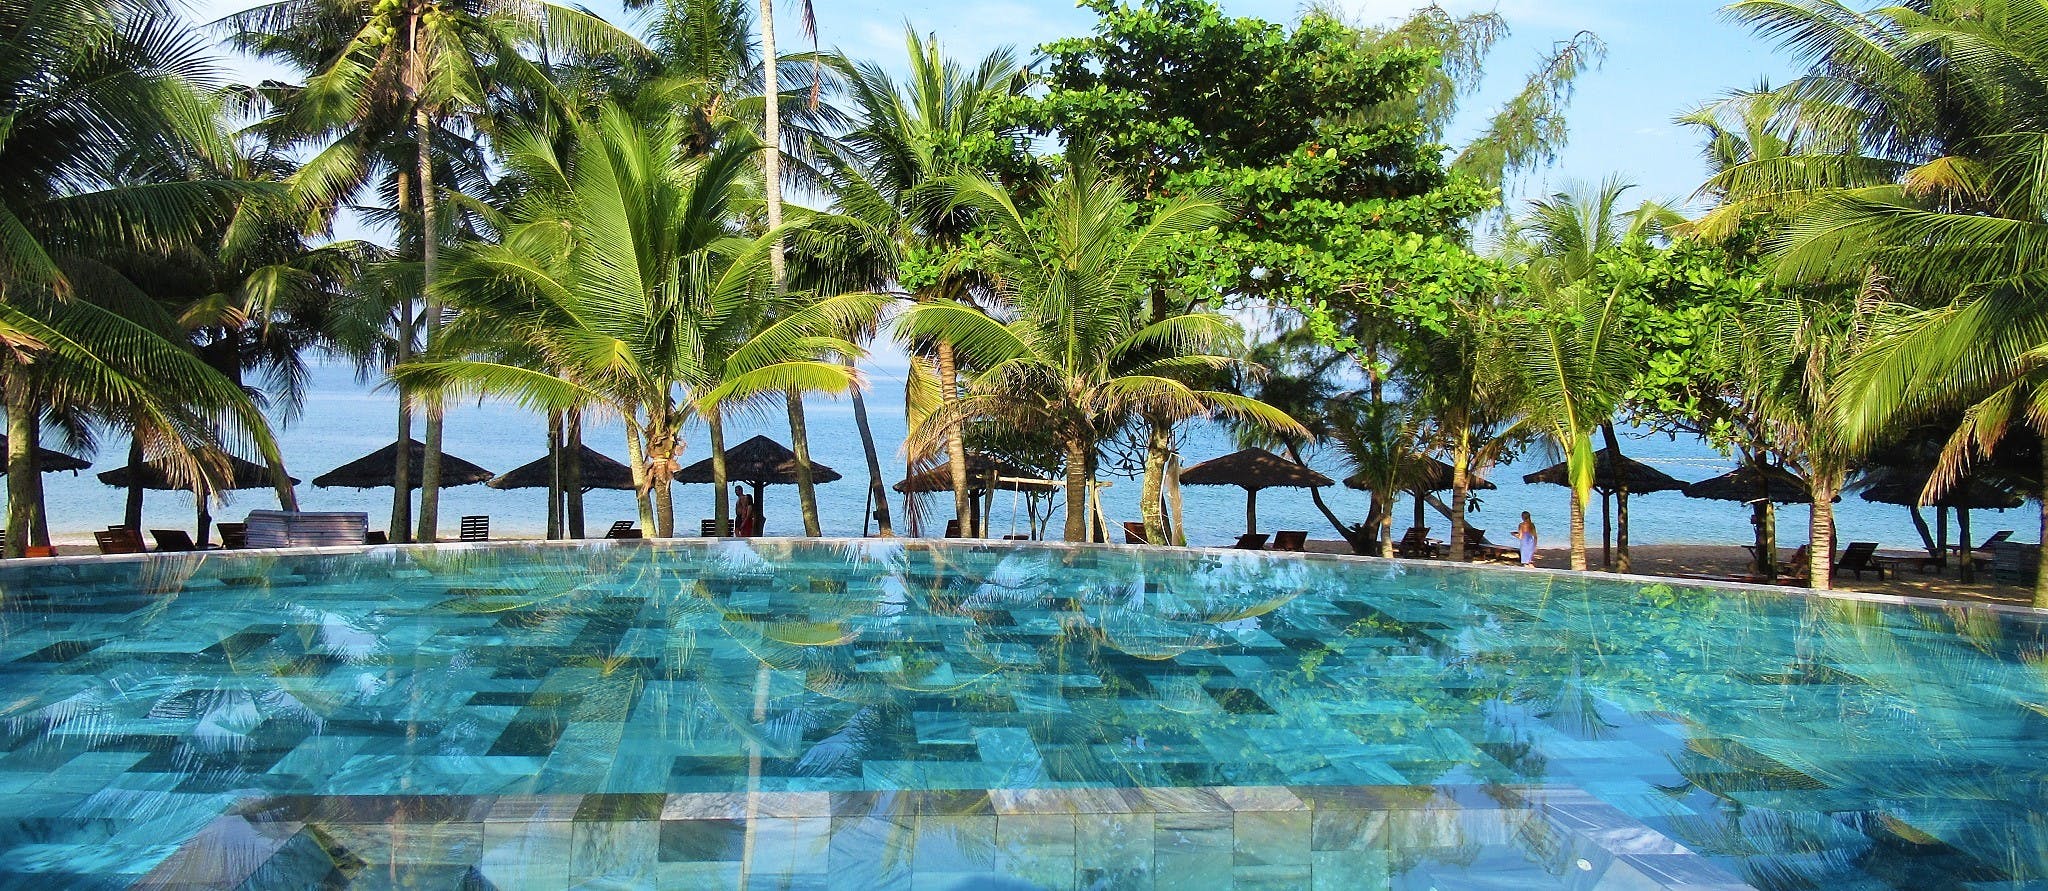 Thanh Kieu Resort, Phu Quoc Island